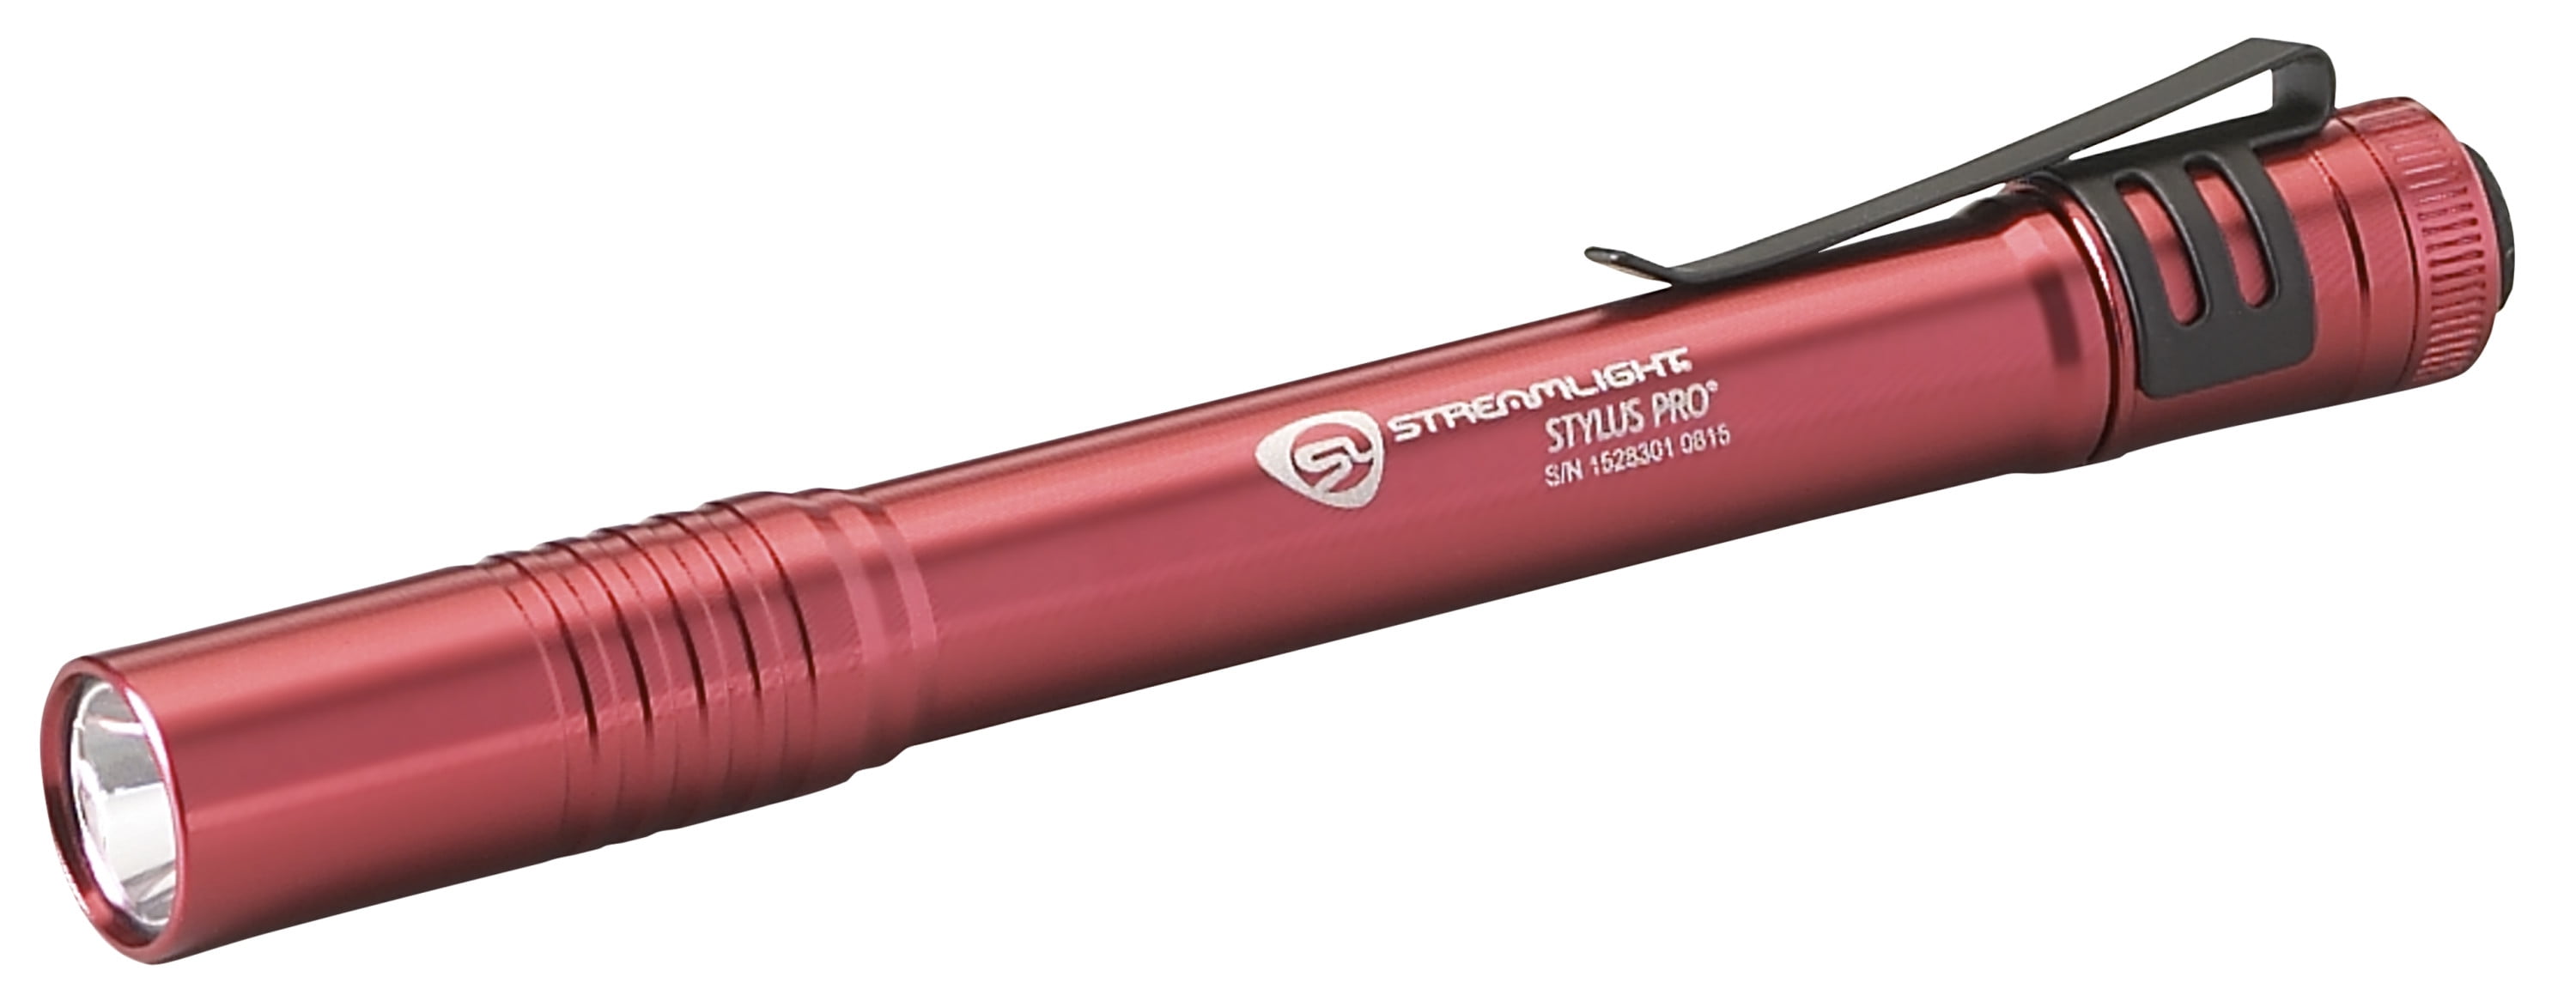 Streamlight Stylus Pro Flashlight 66120 RED